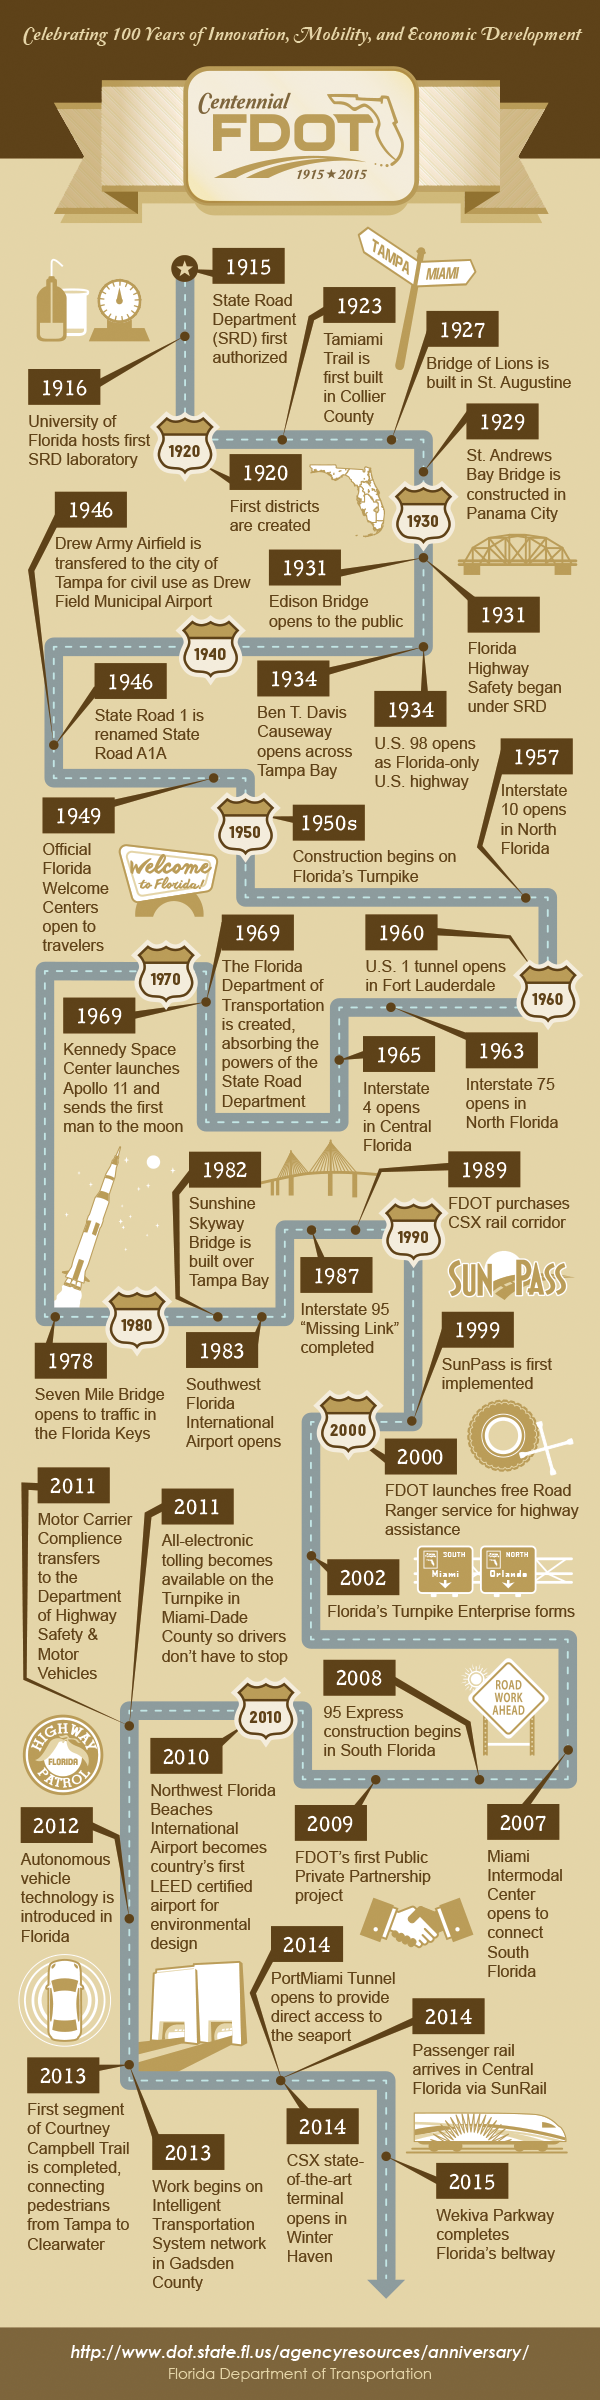 Florida Department of Tranpsortation Centennial timeline